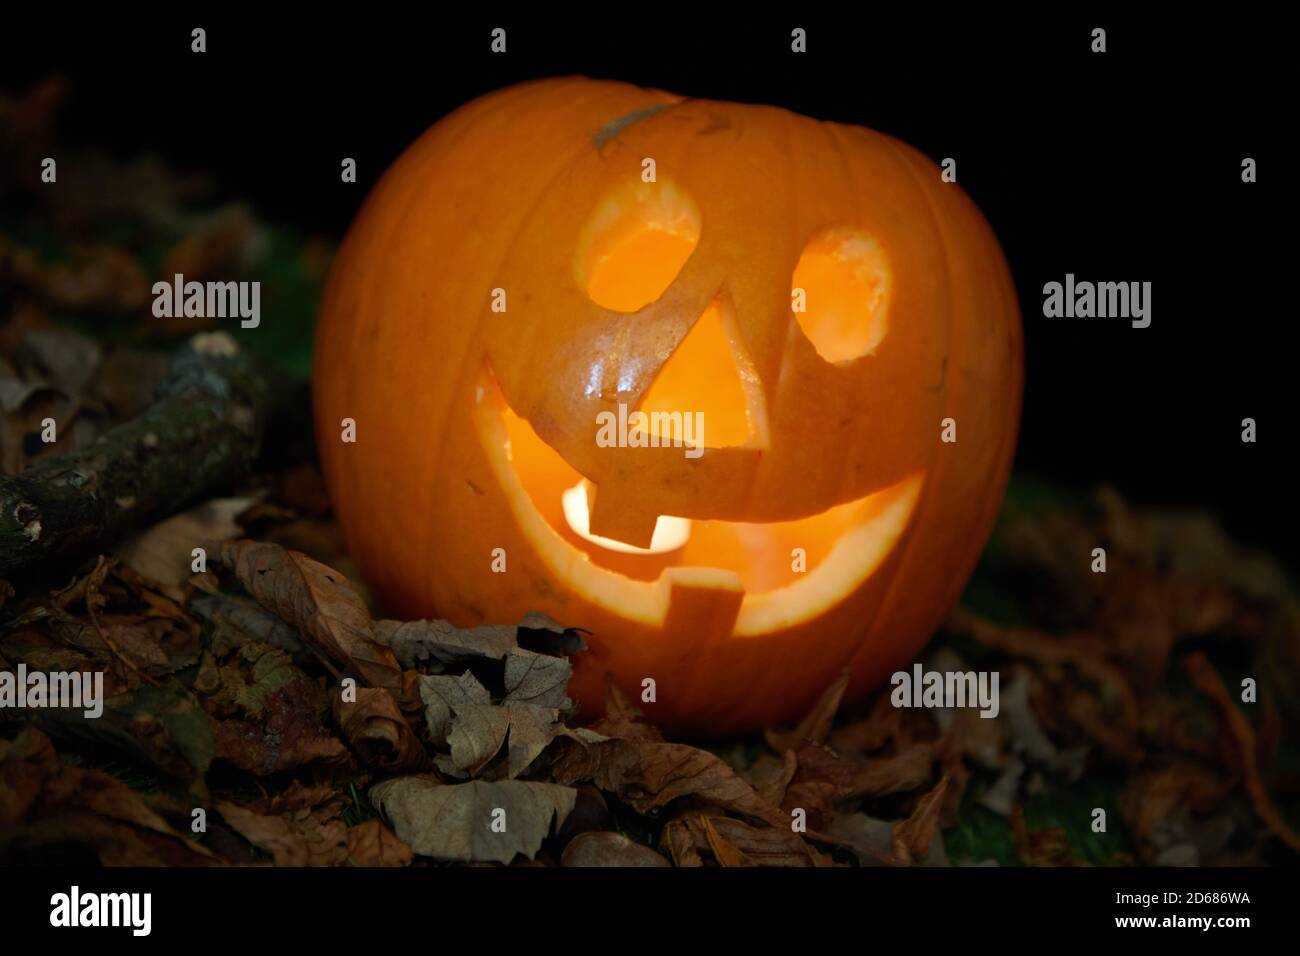 Halloween pumpkin against black background Stock Photo